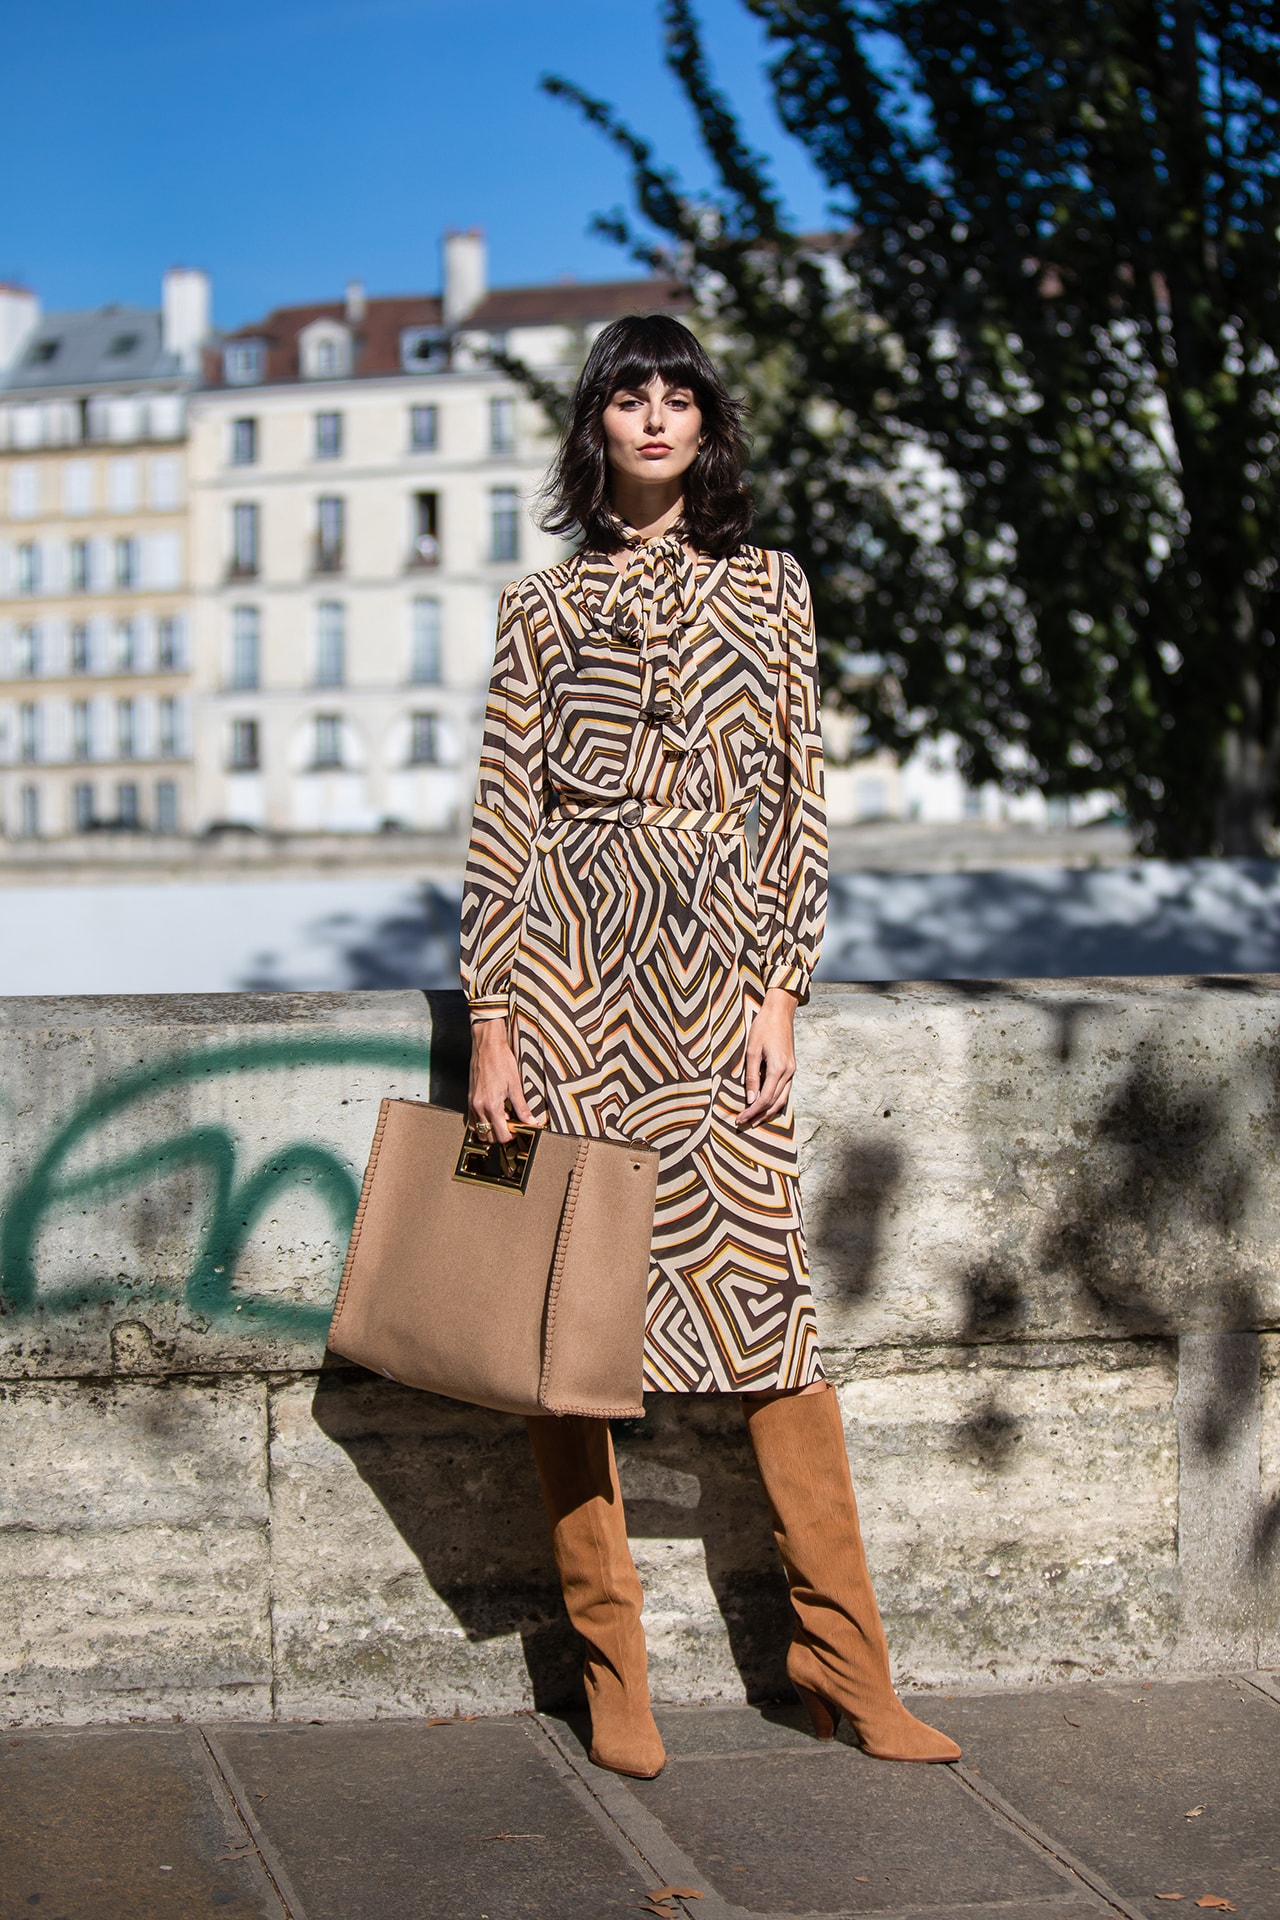 Paris Fashion Week Spring Summer 2022 SS22 Street Style Look Outfit Influencer Fendi Bag Beige Brown Dress Bots